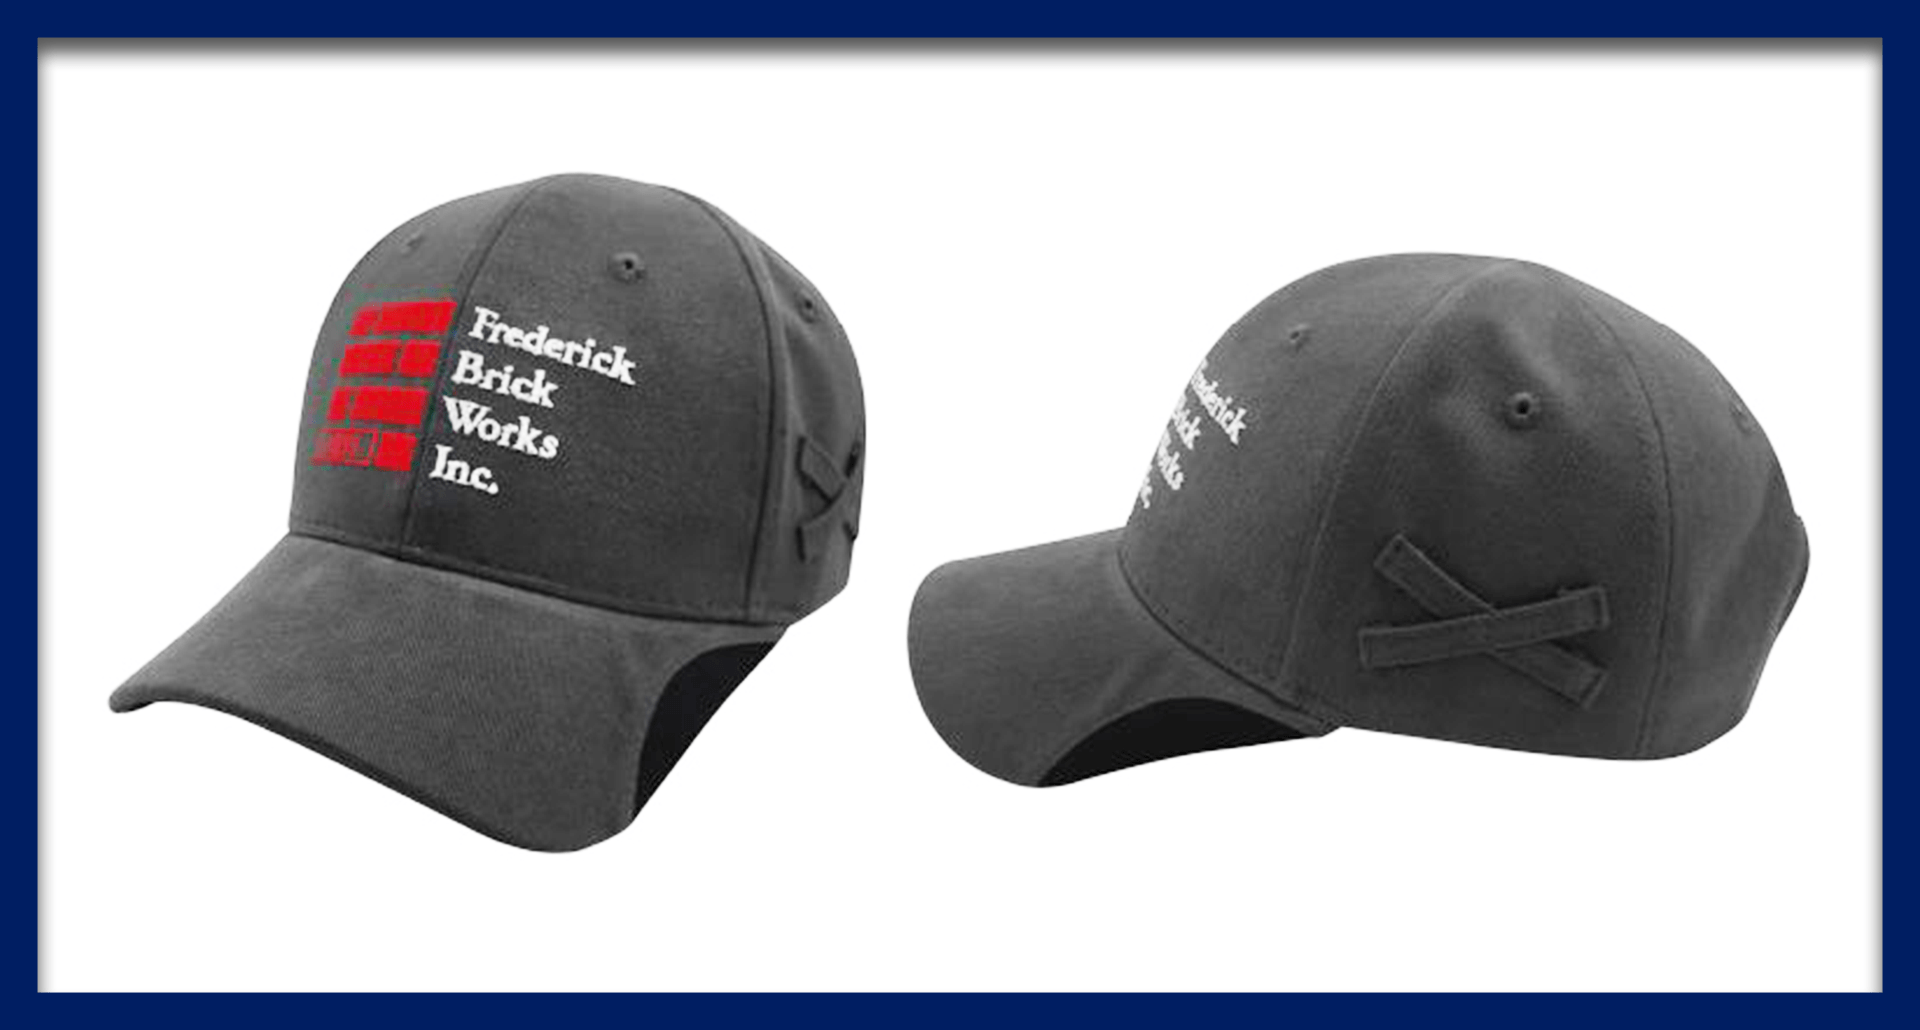 Case Study: Frederick Brick Works' Hat